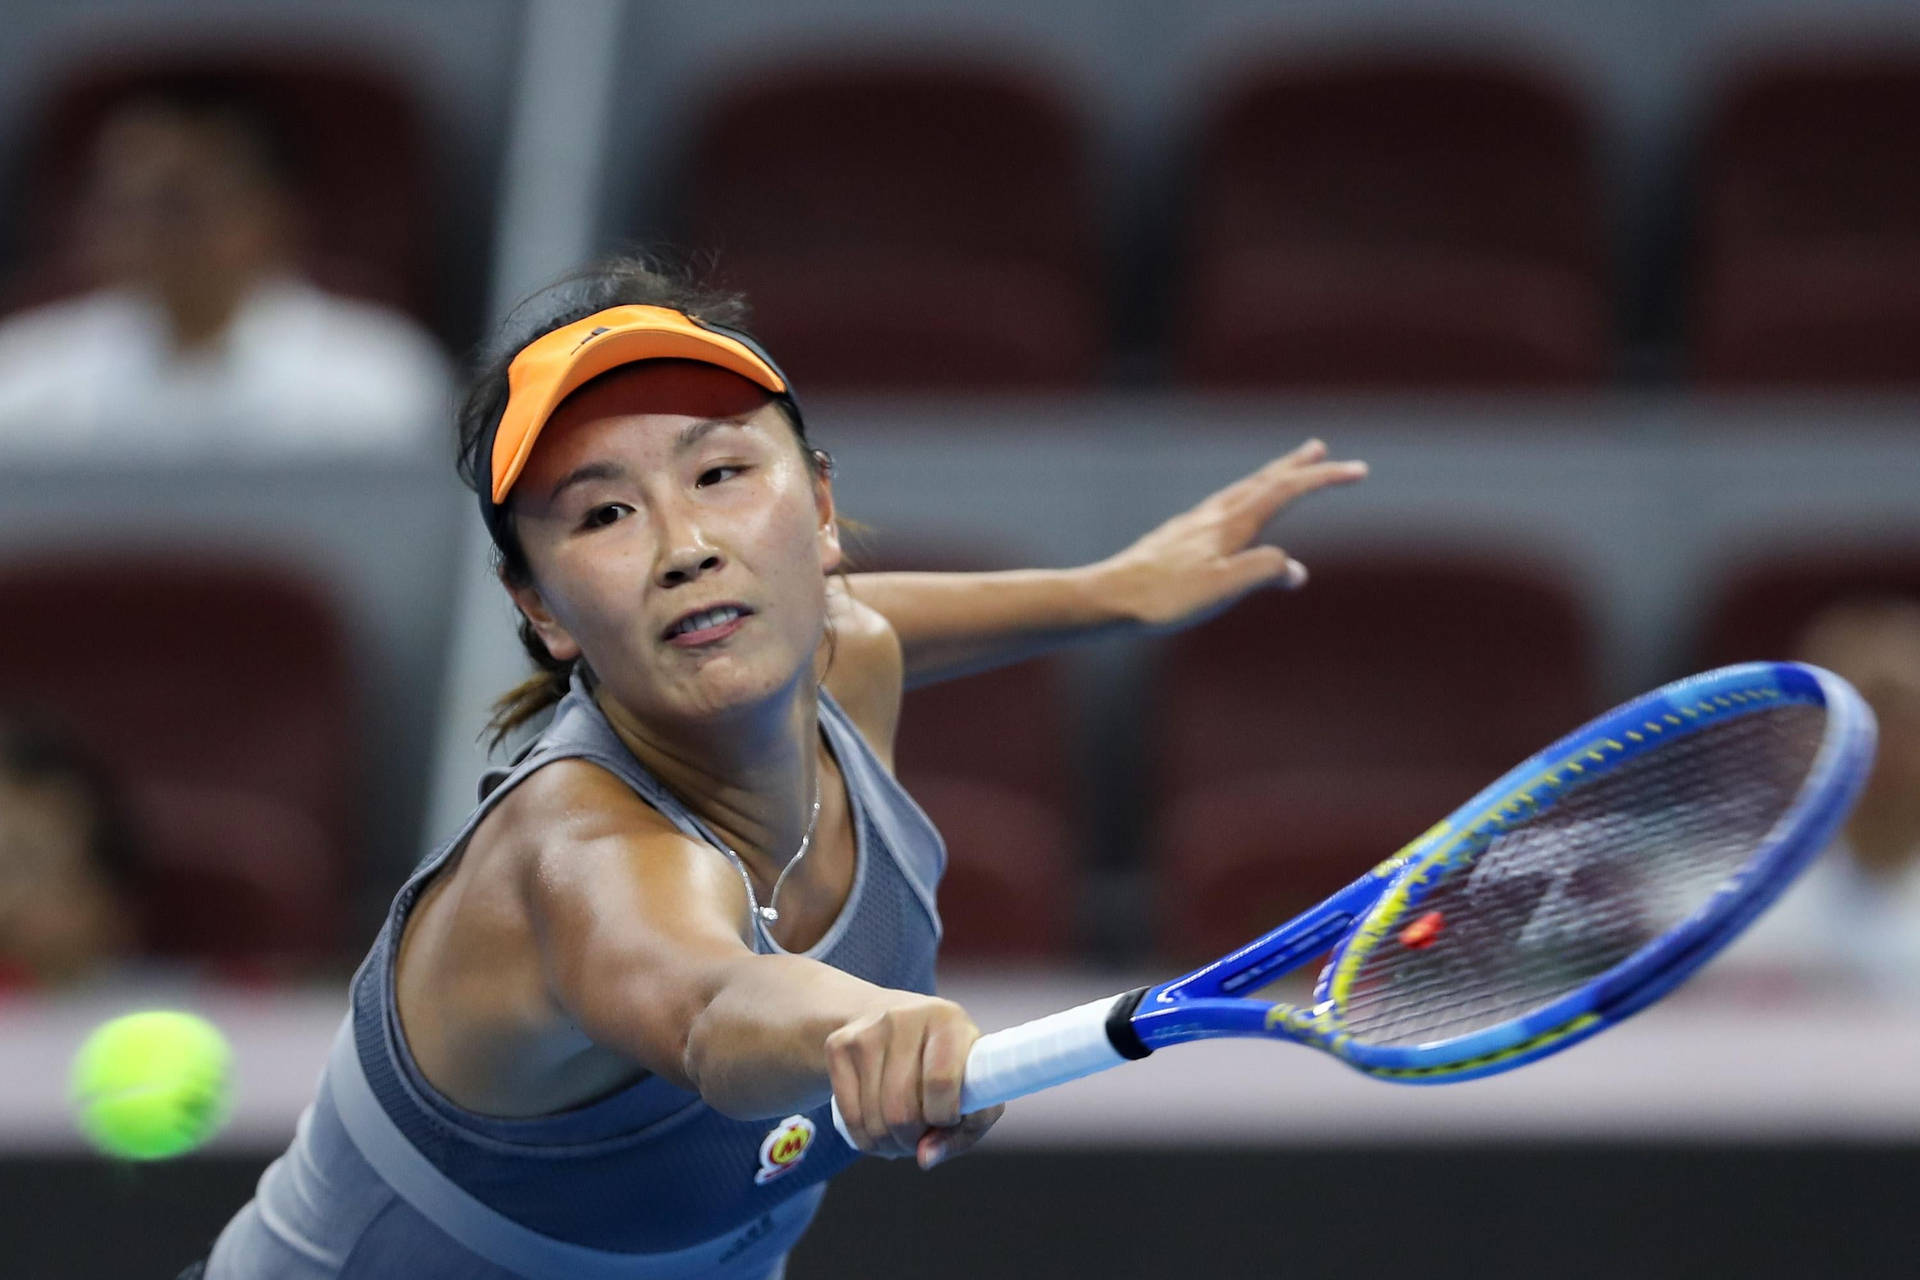 Shuai Peng powerfully reaching for a tennis ball in a match Wallpaper